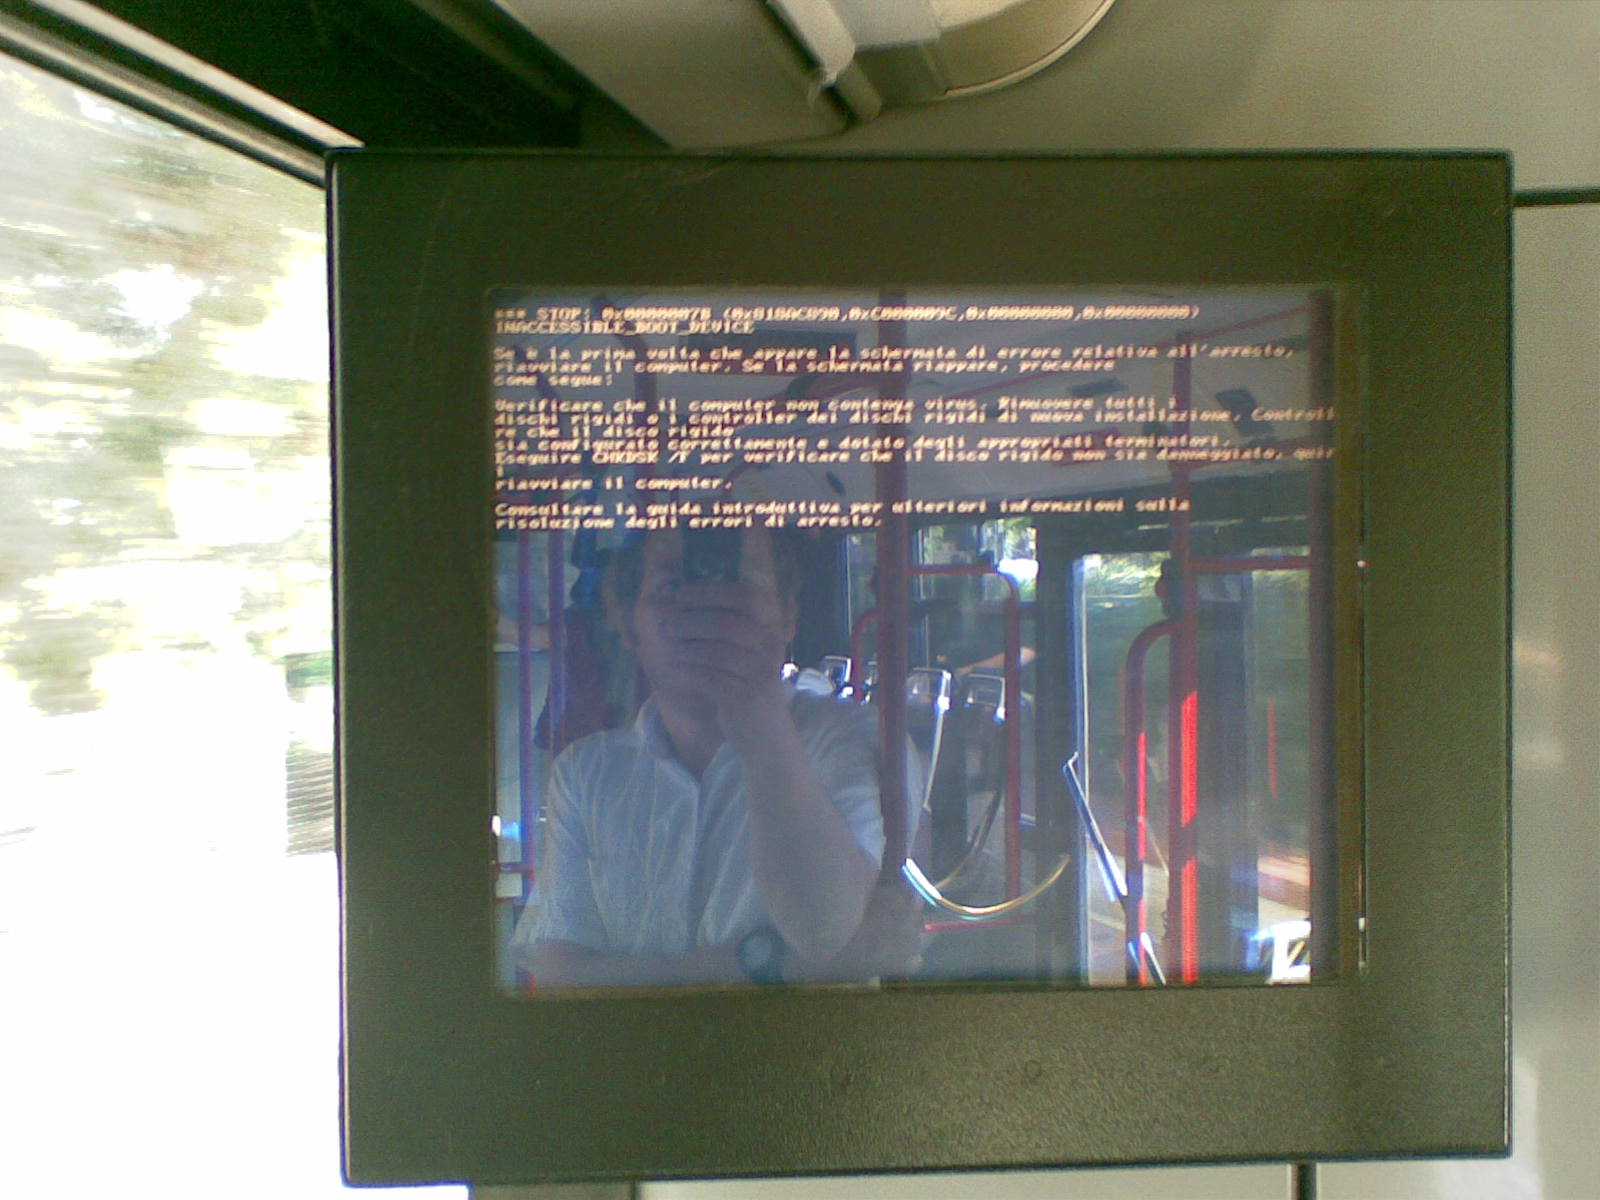 Computer screen displaying error messages